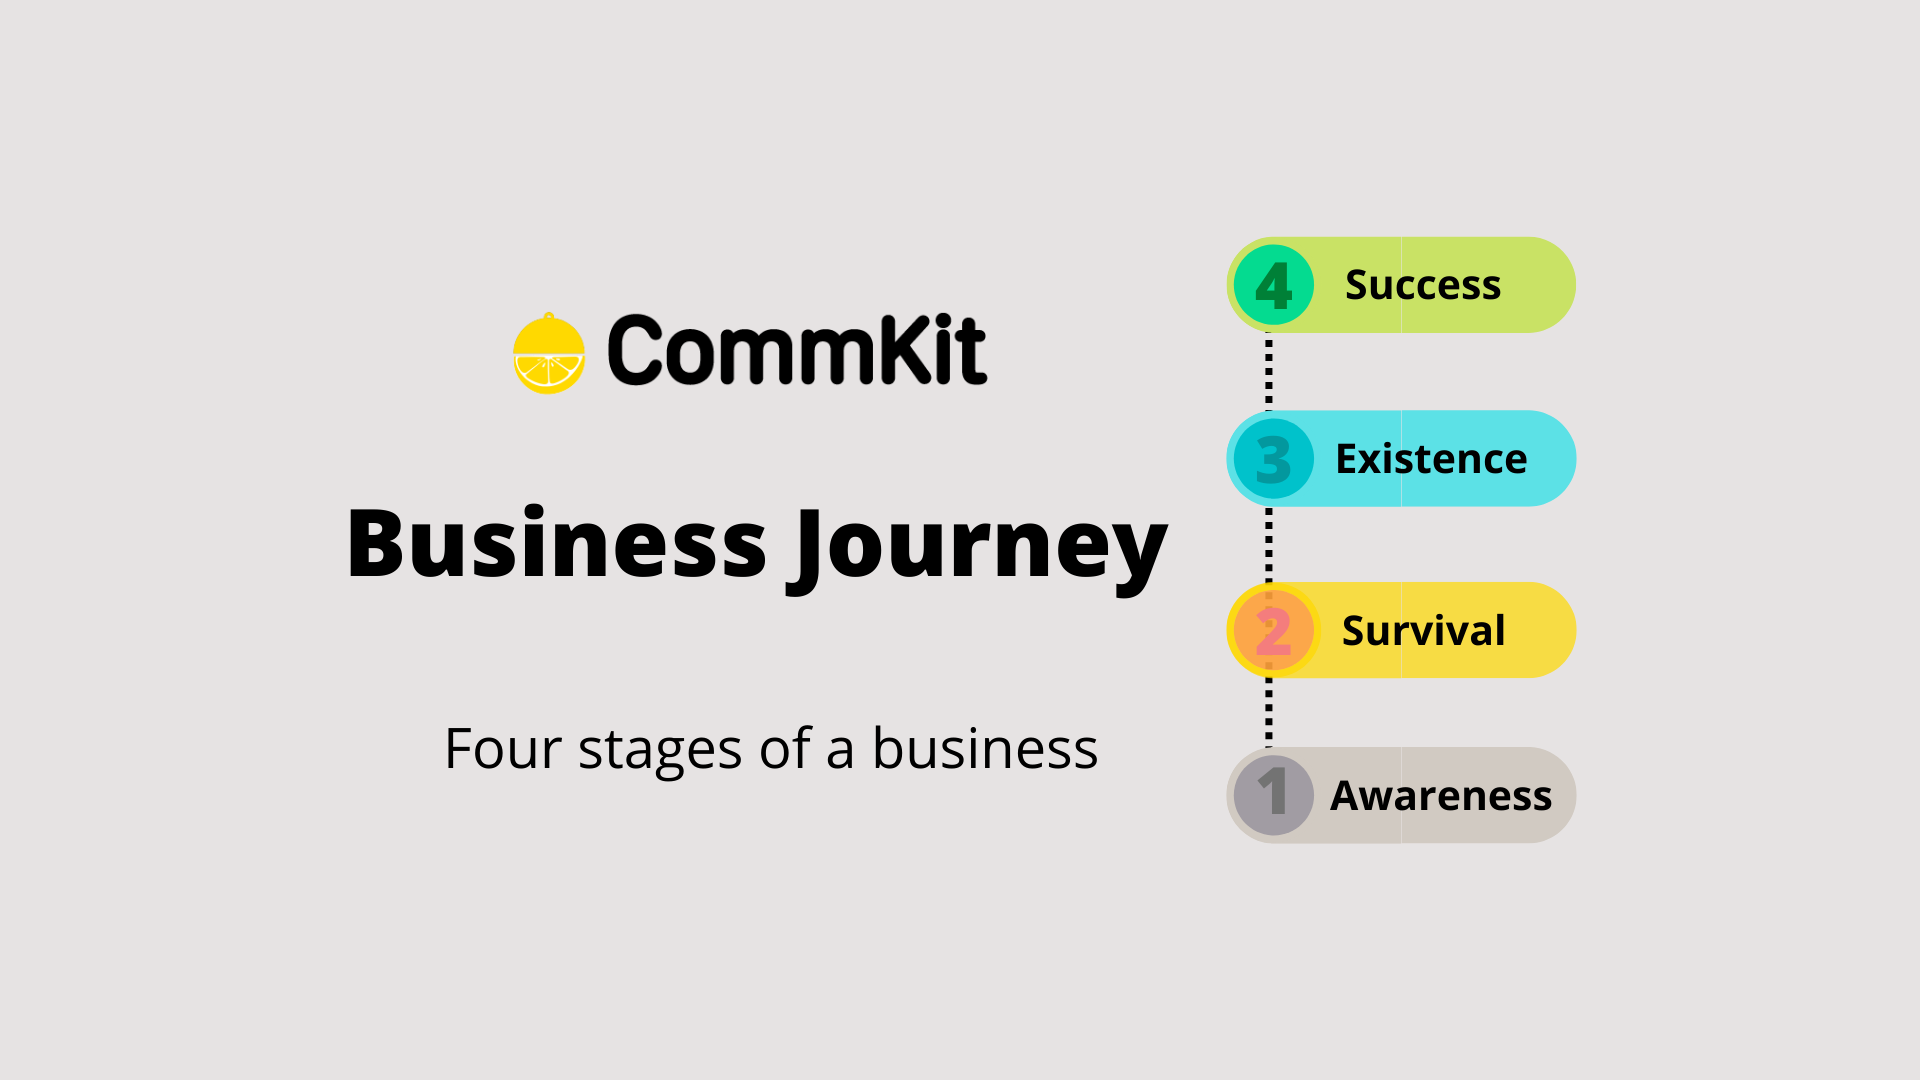 CommKit Business Journey